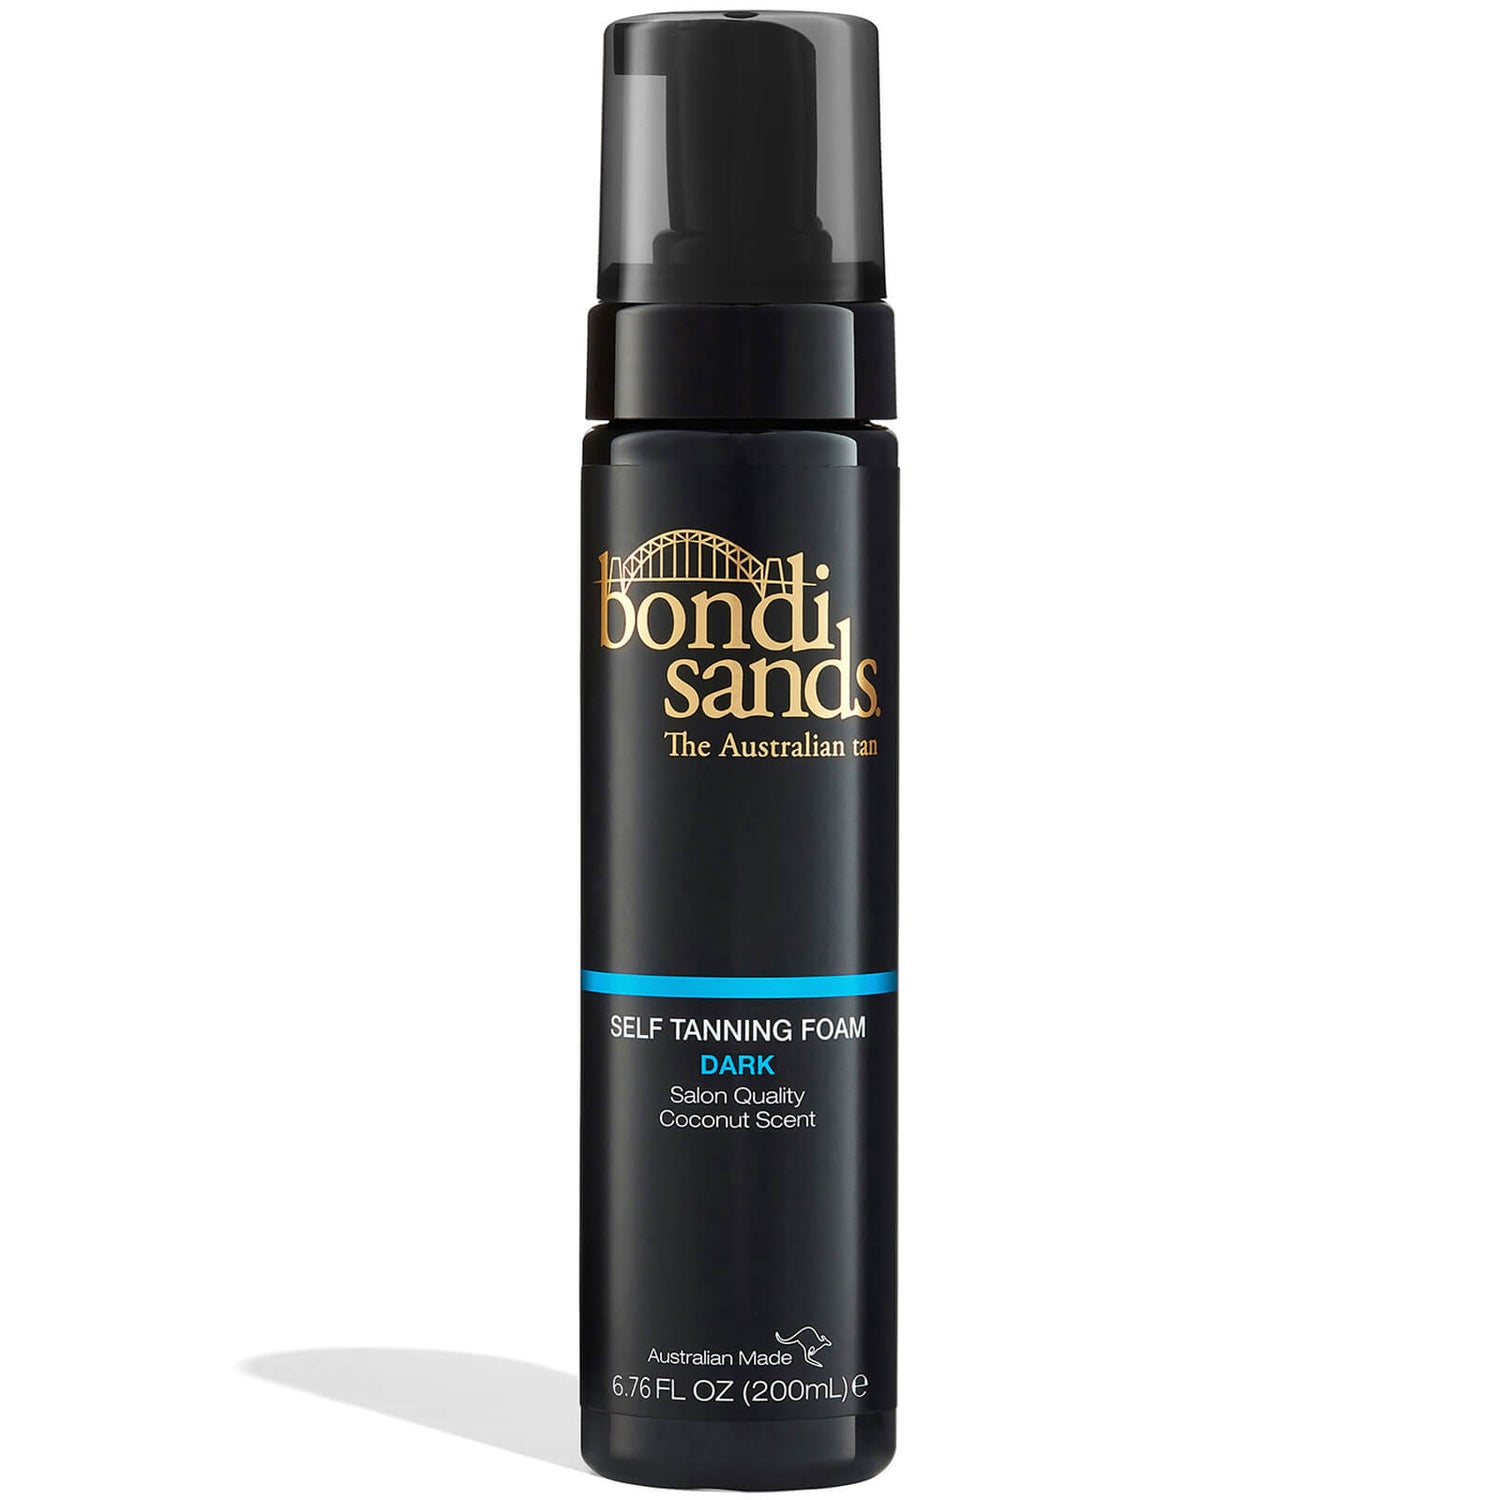 Bondi Sands Self Tanning Foam 200 ml - Dark